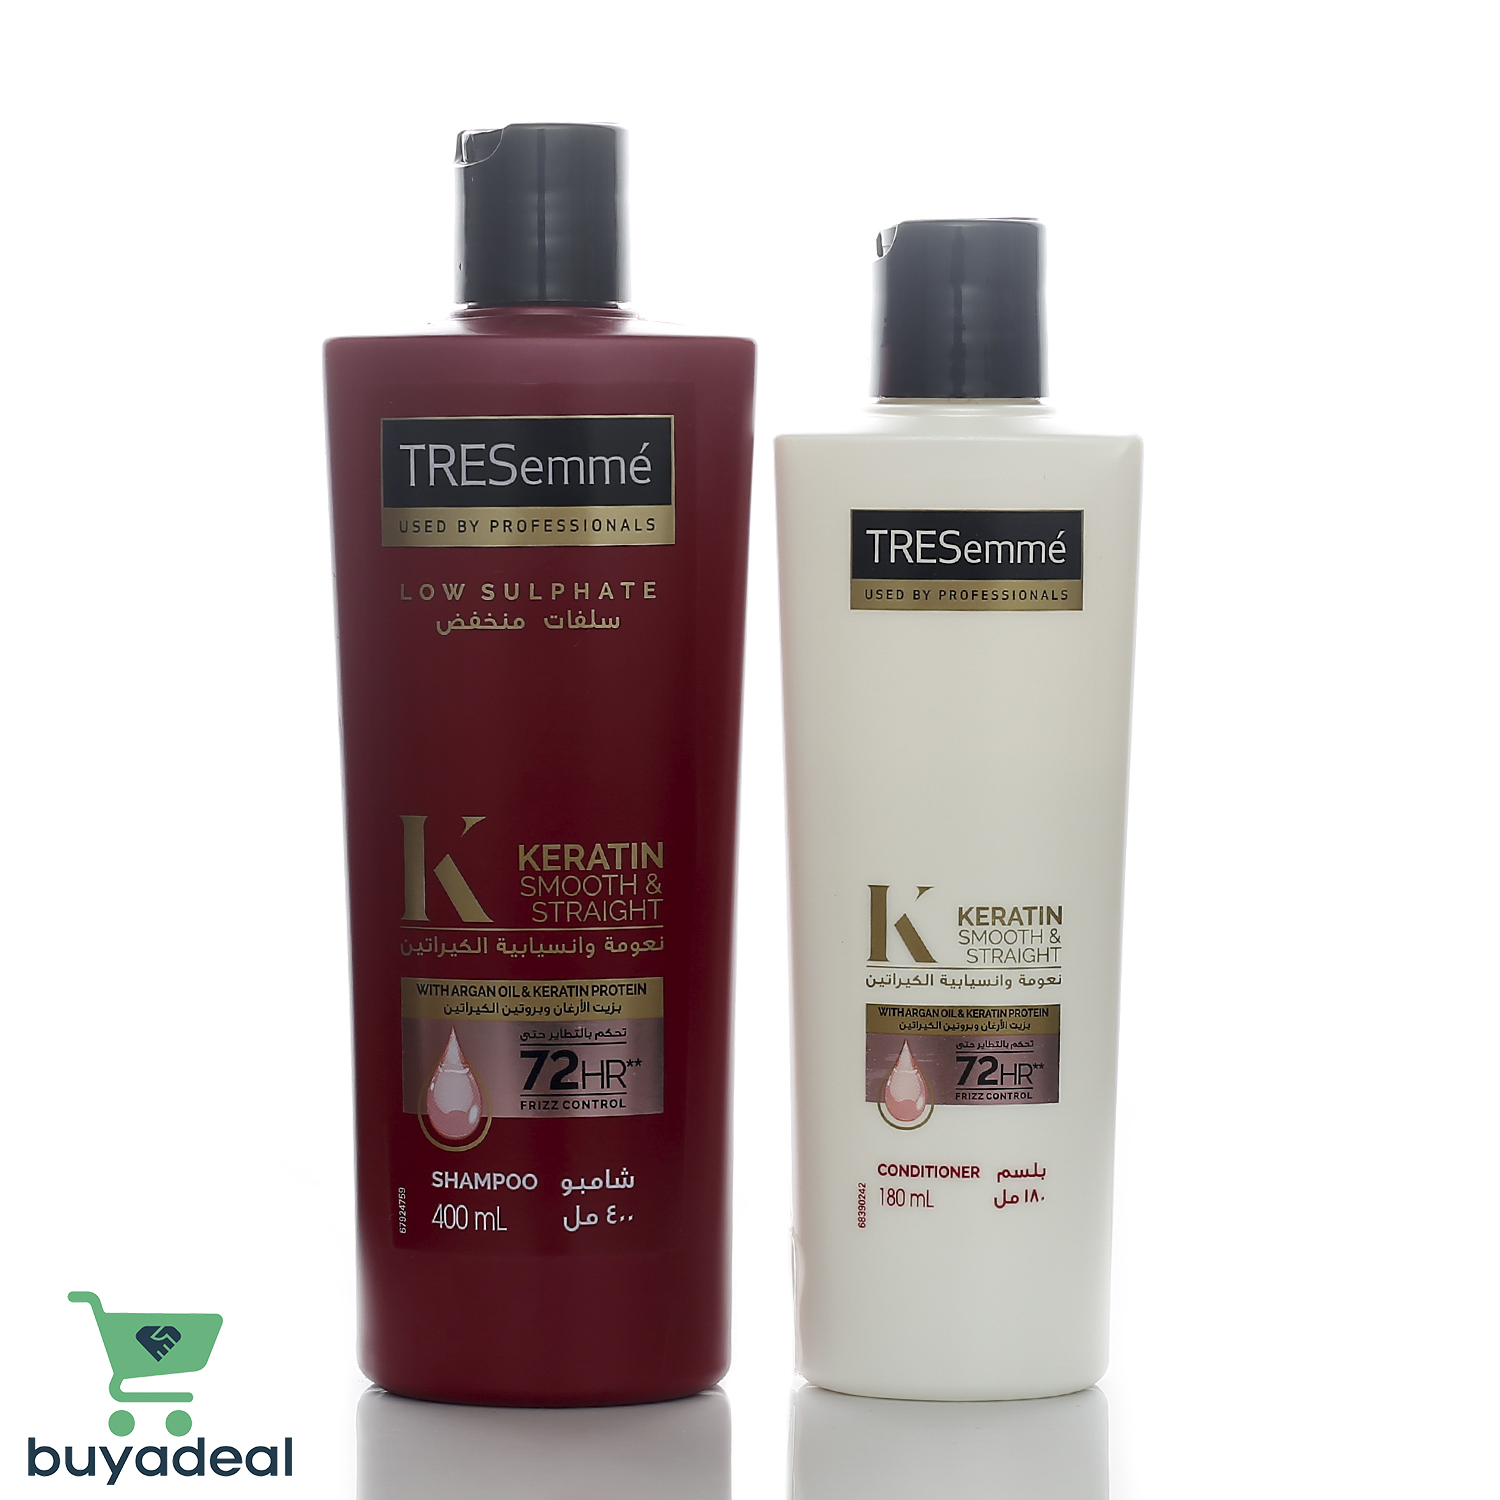 Buyadeal Product TRESemmé Keratin Smooth & Straight Shampoo with Argan oil, 400ml + Conditioner, 180ml